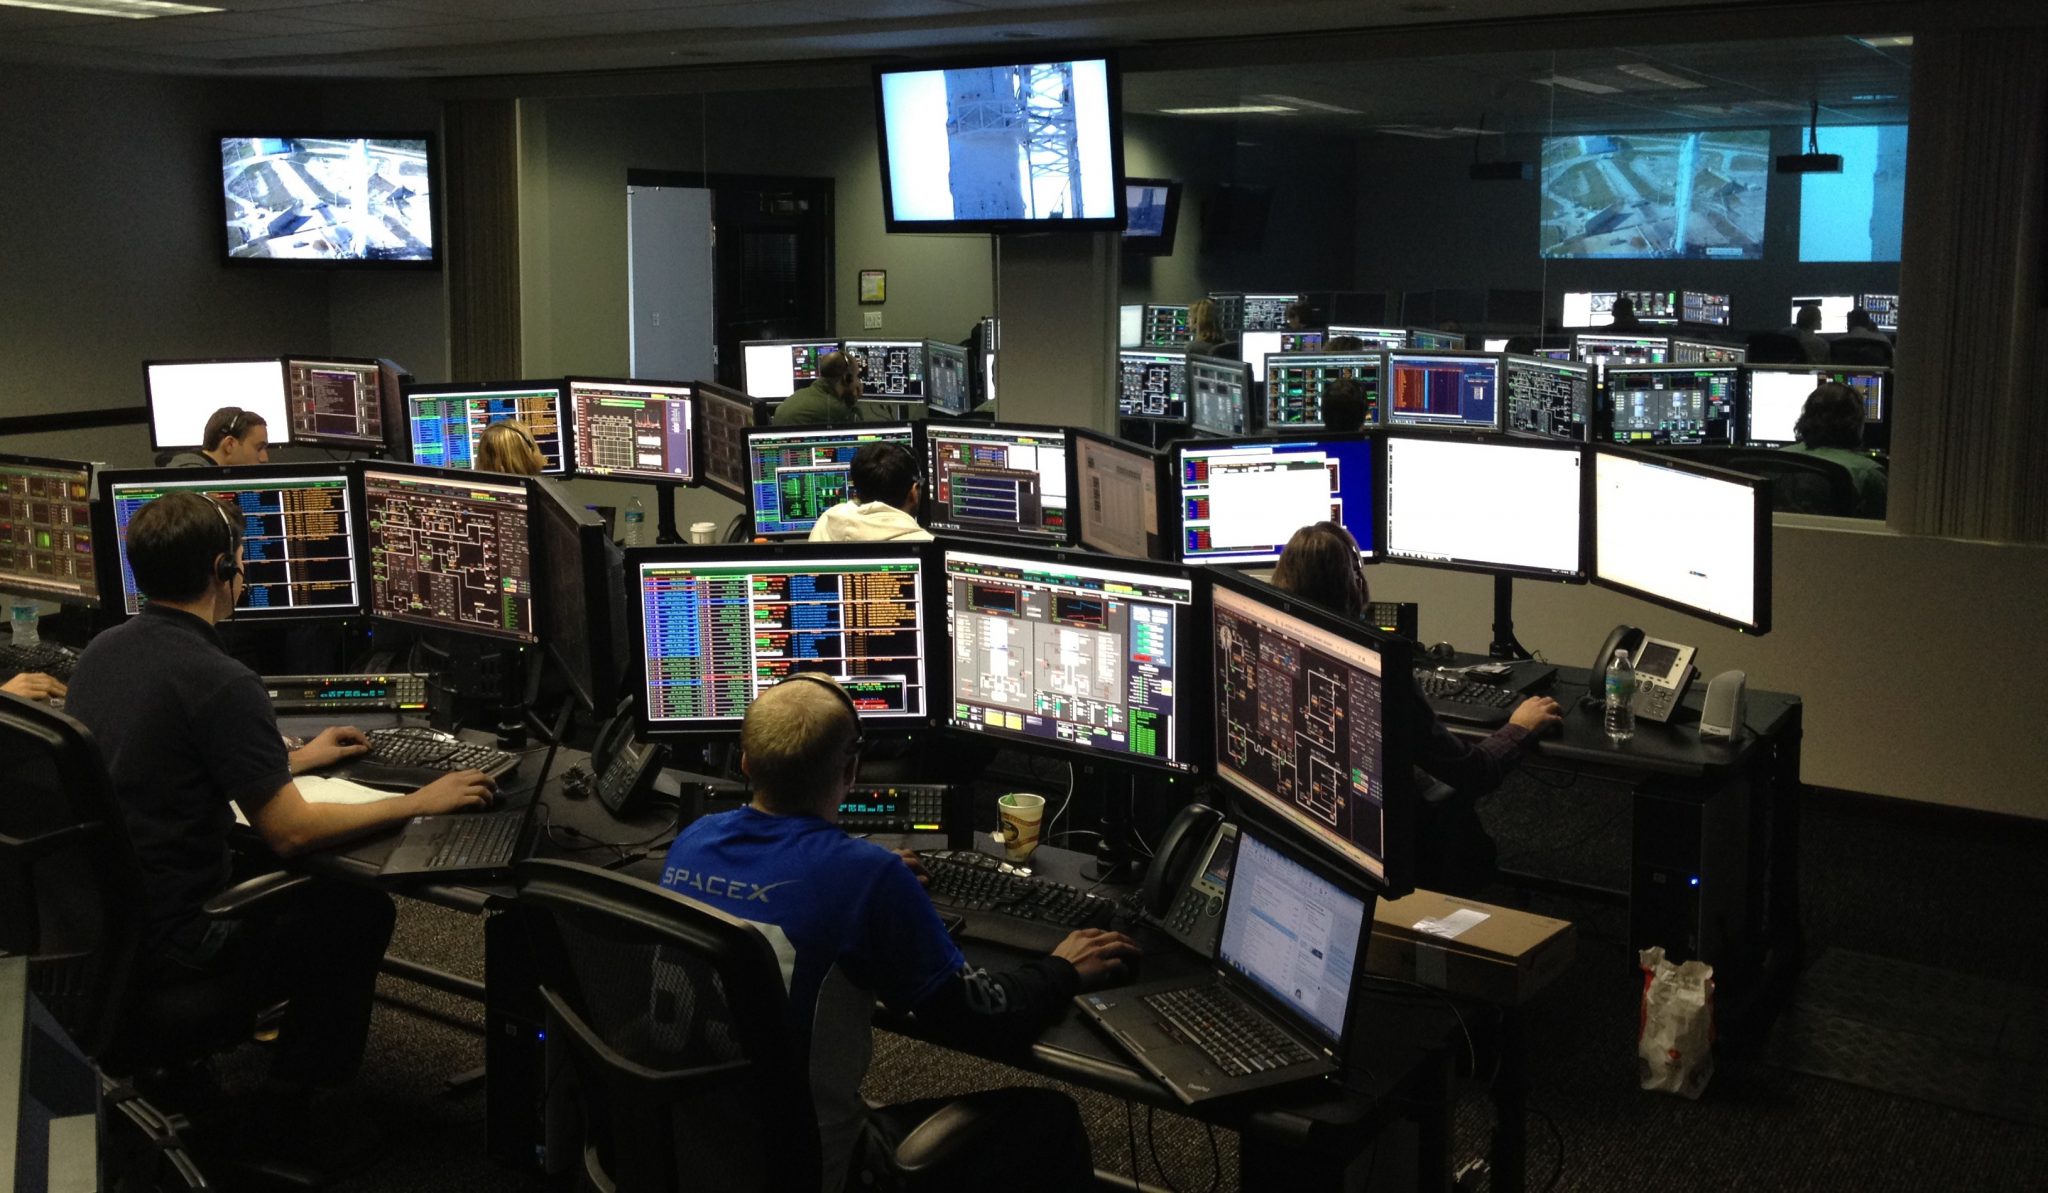 蘋果 Apple Mac & Macbook 電腦外接大螢幕的顯示器更新頻率與解析度問題探討 Technology Control Room LCD Multi Monitor Station SpaceX